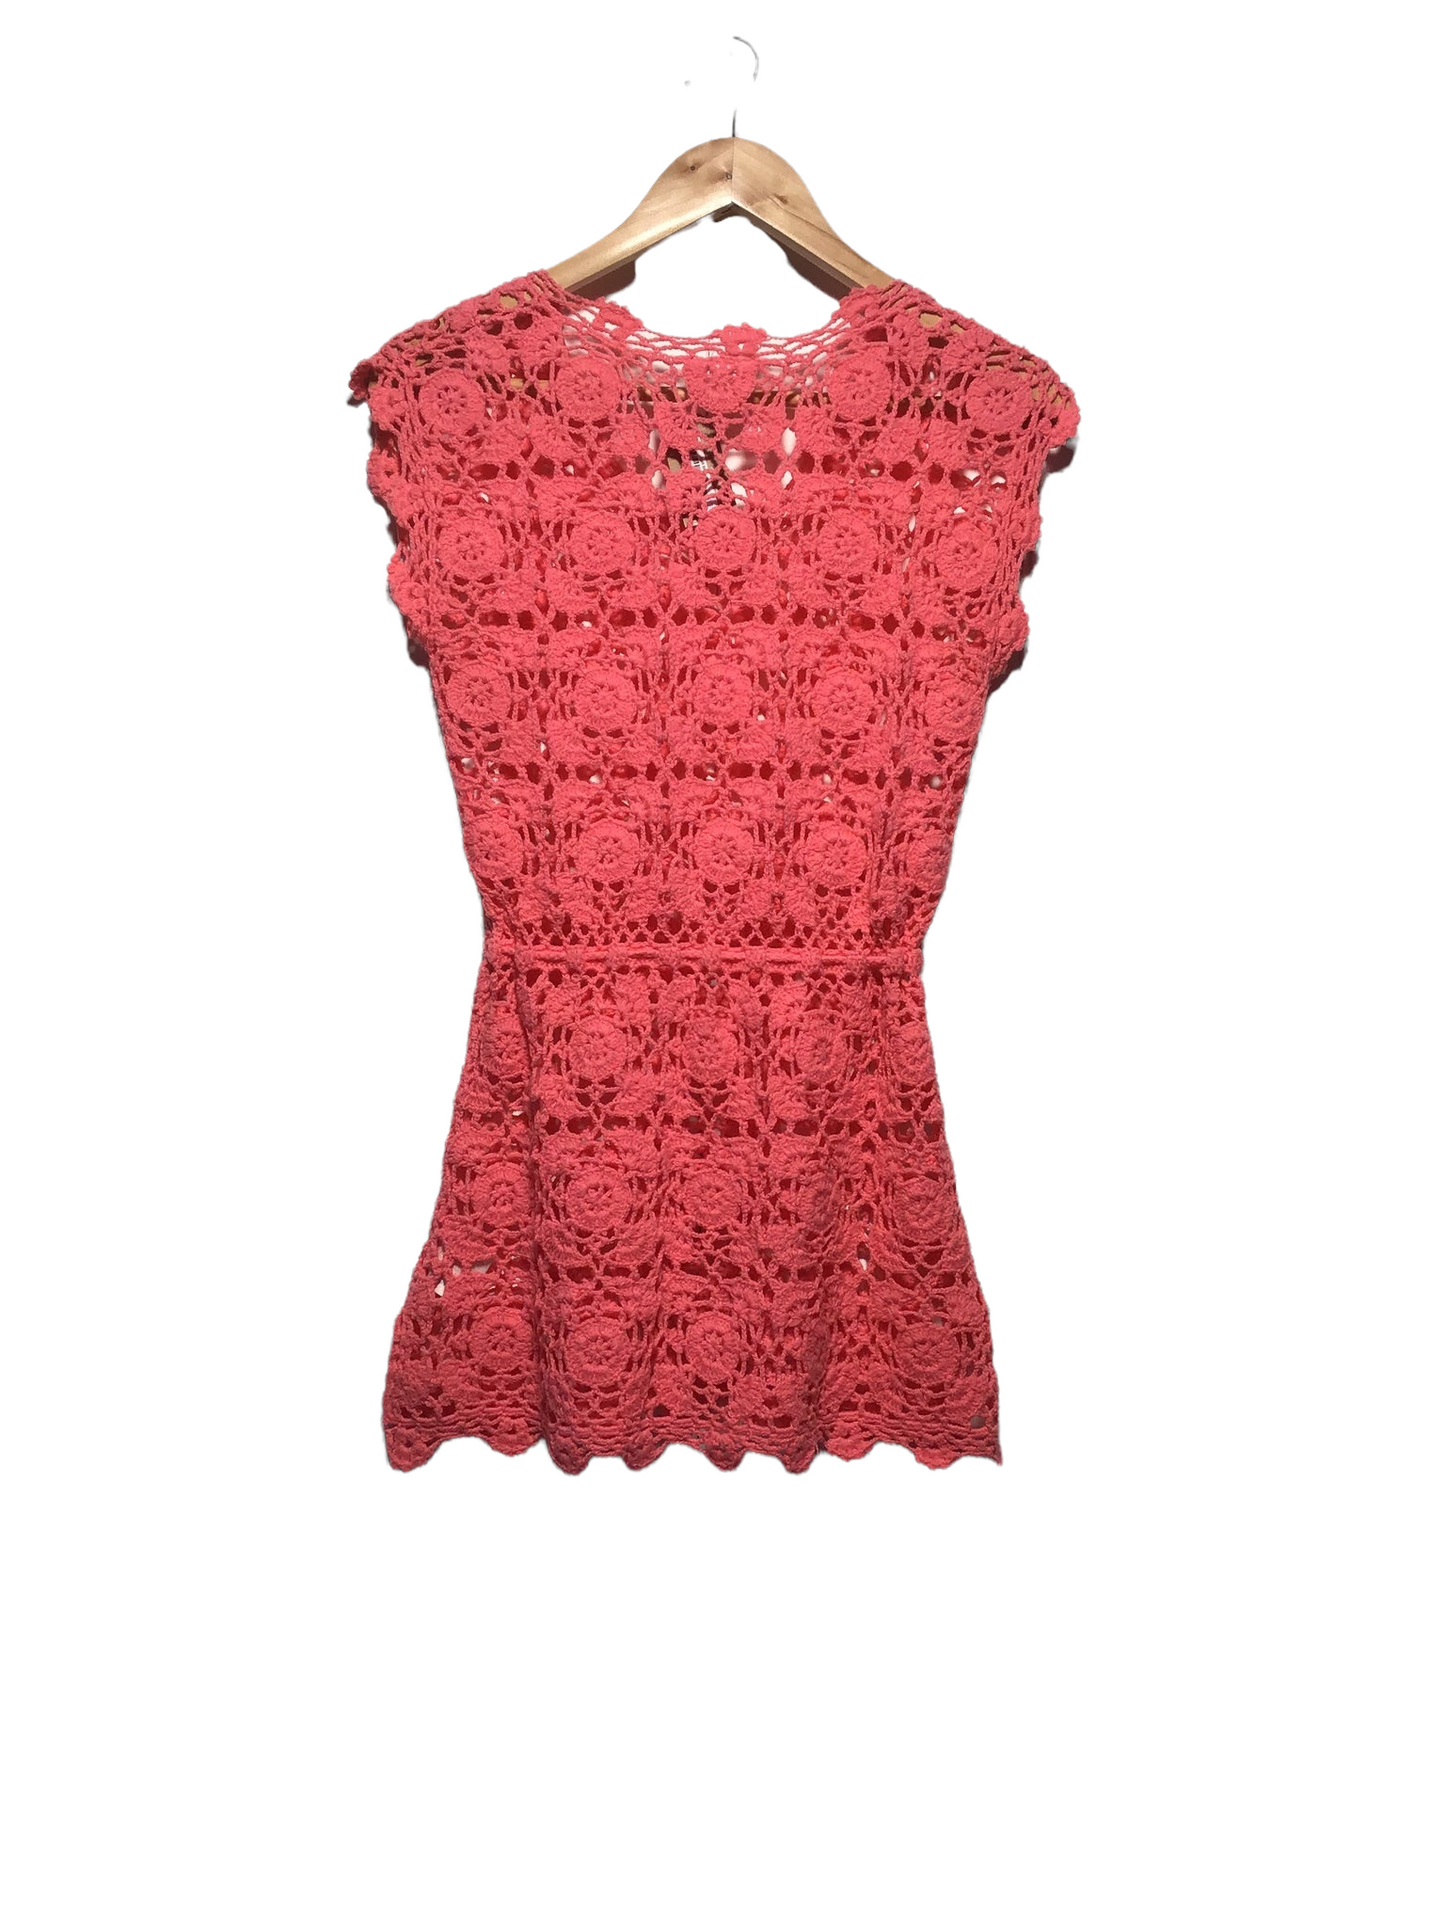 Alibi Crochet Dress (Size S)